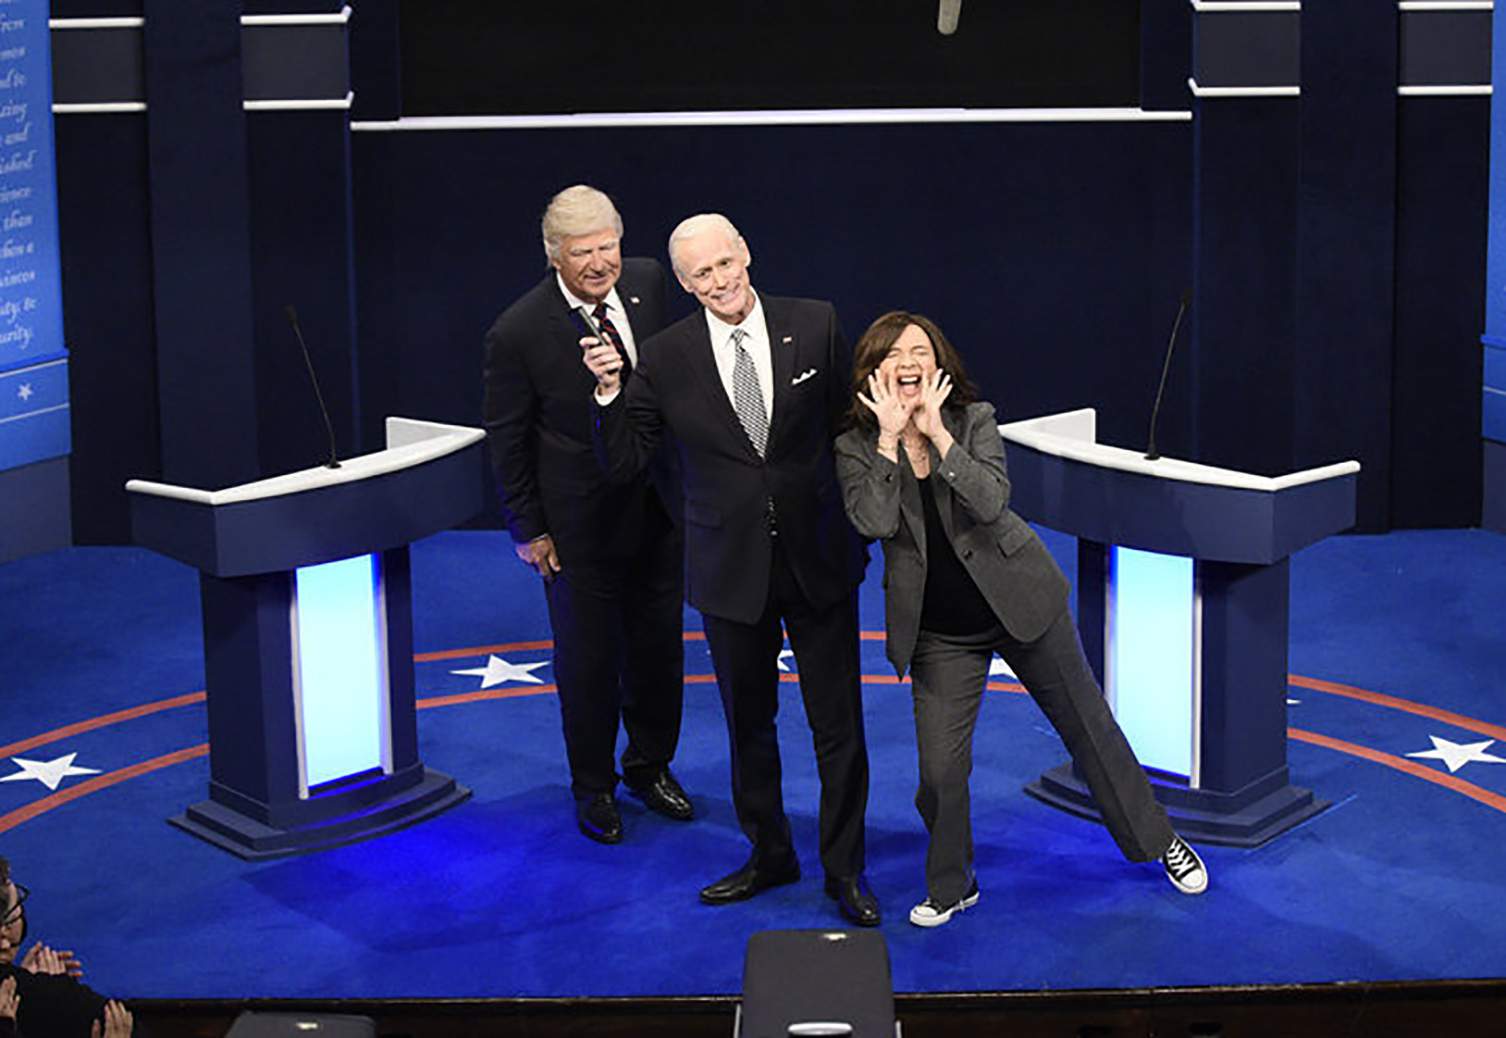 'Saturday Night Live' recreates debate in 46th season opener